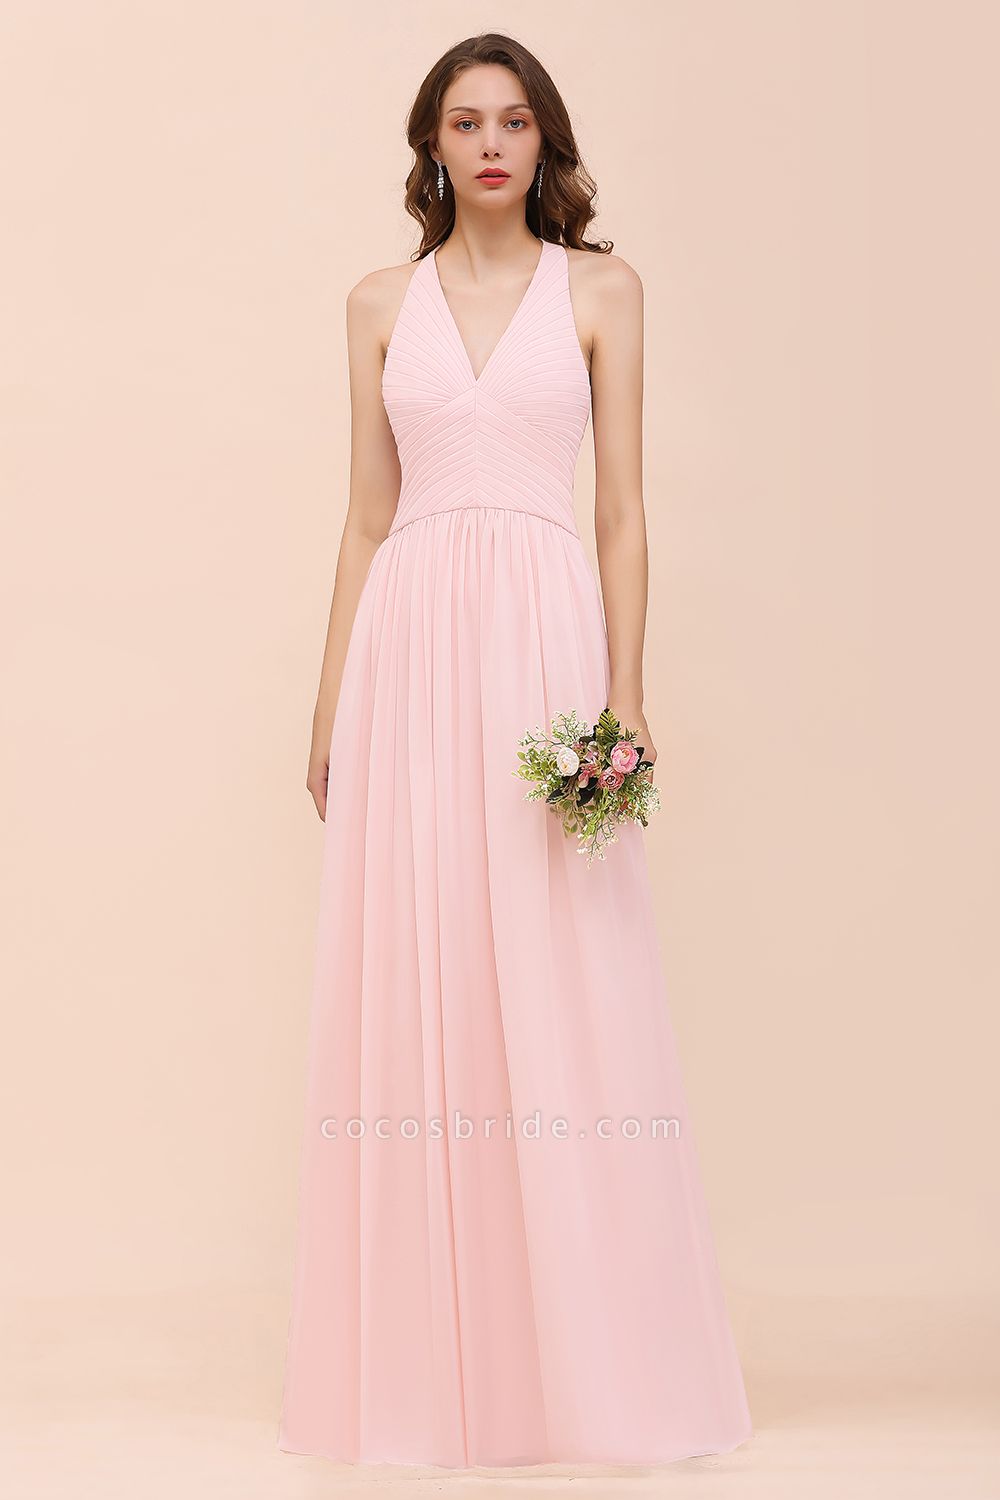 Simple Pink V-Neck Bridesmaid Dress A-Line Chiffon Wedding Guest Dress